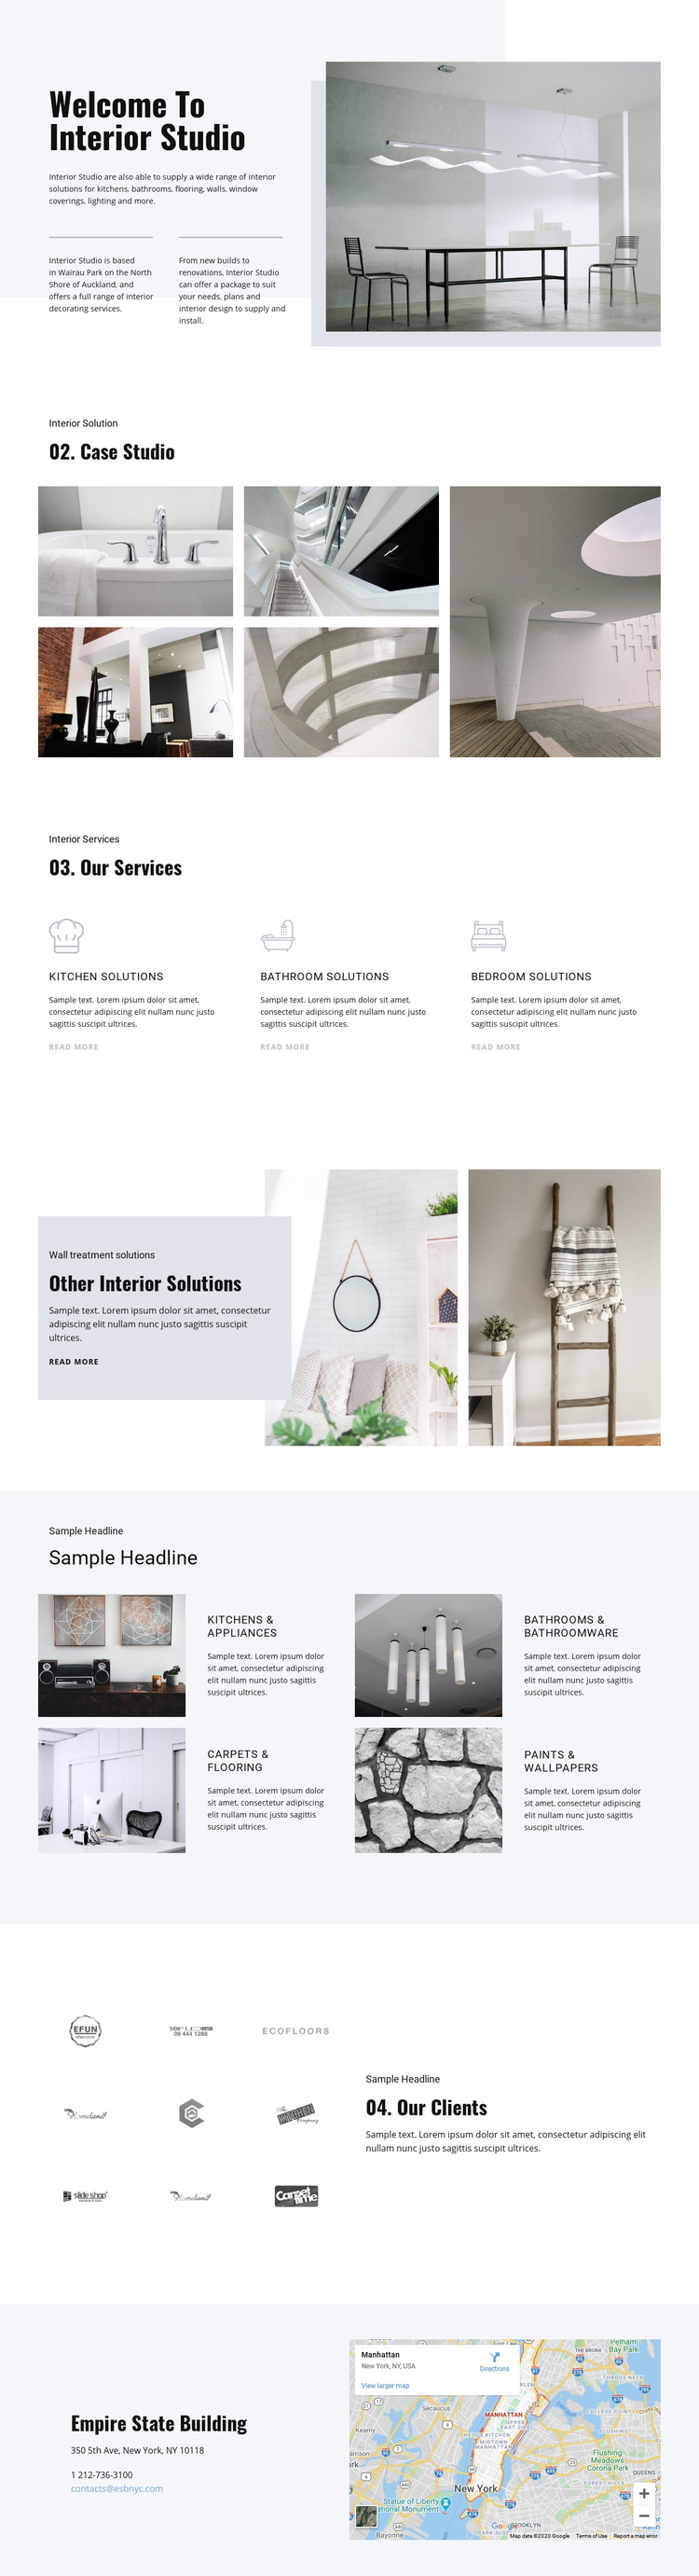 Welcome to interior studio Web Page Designer